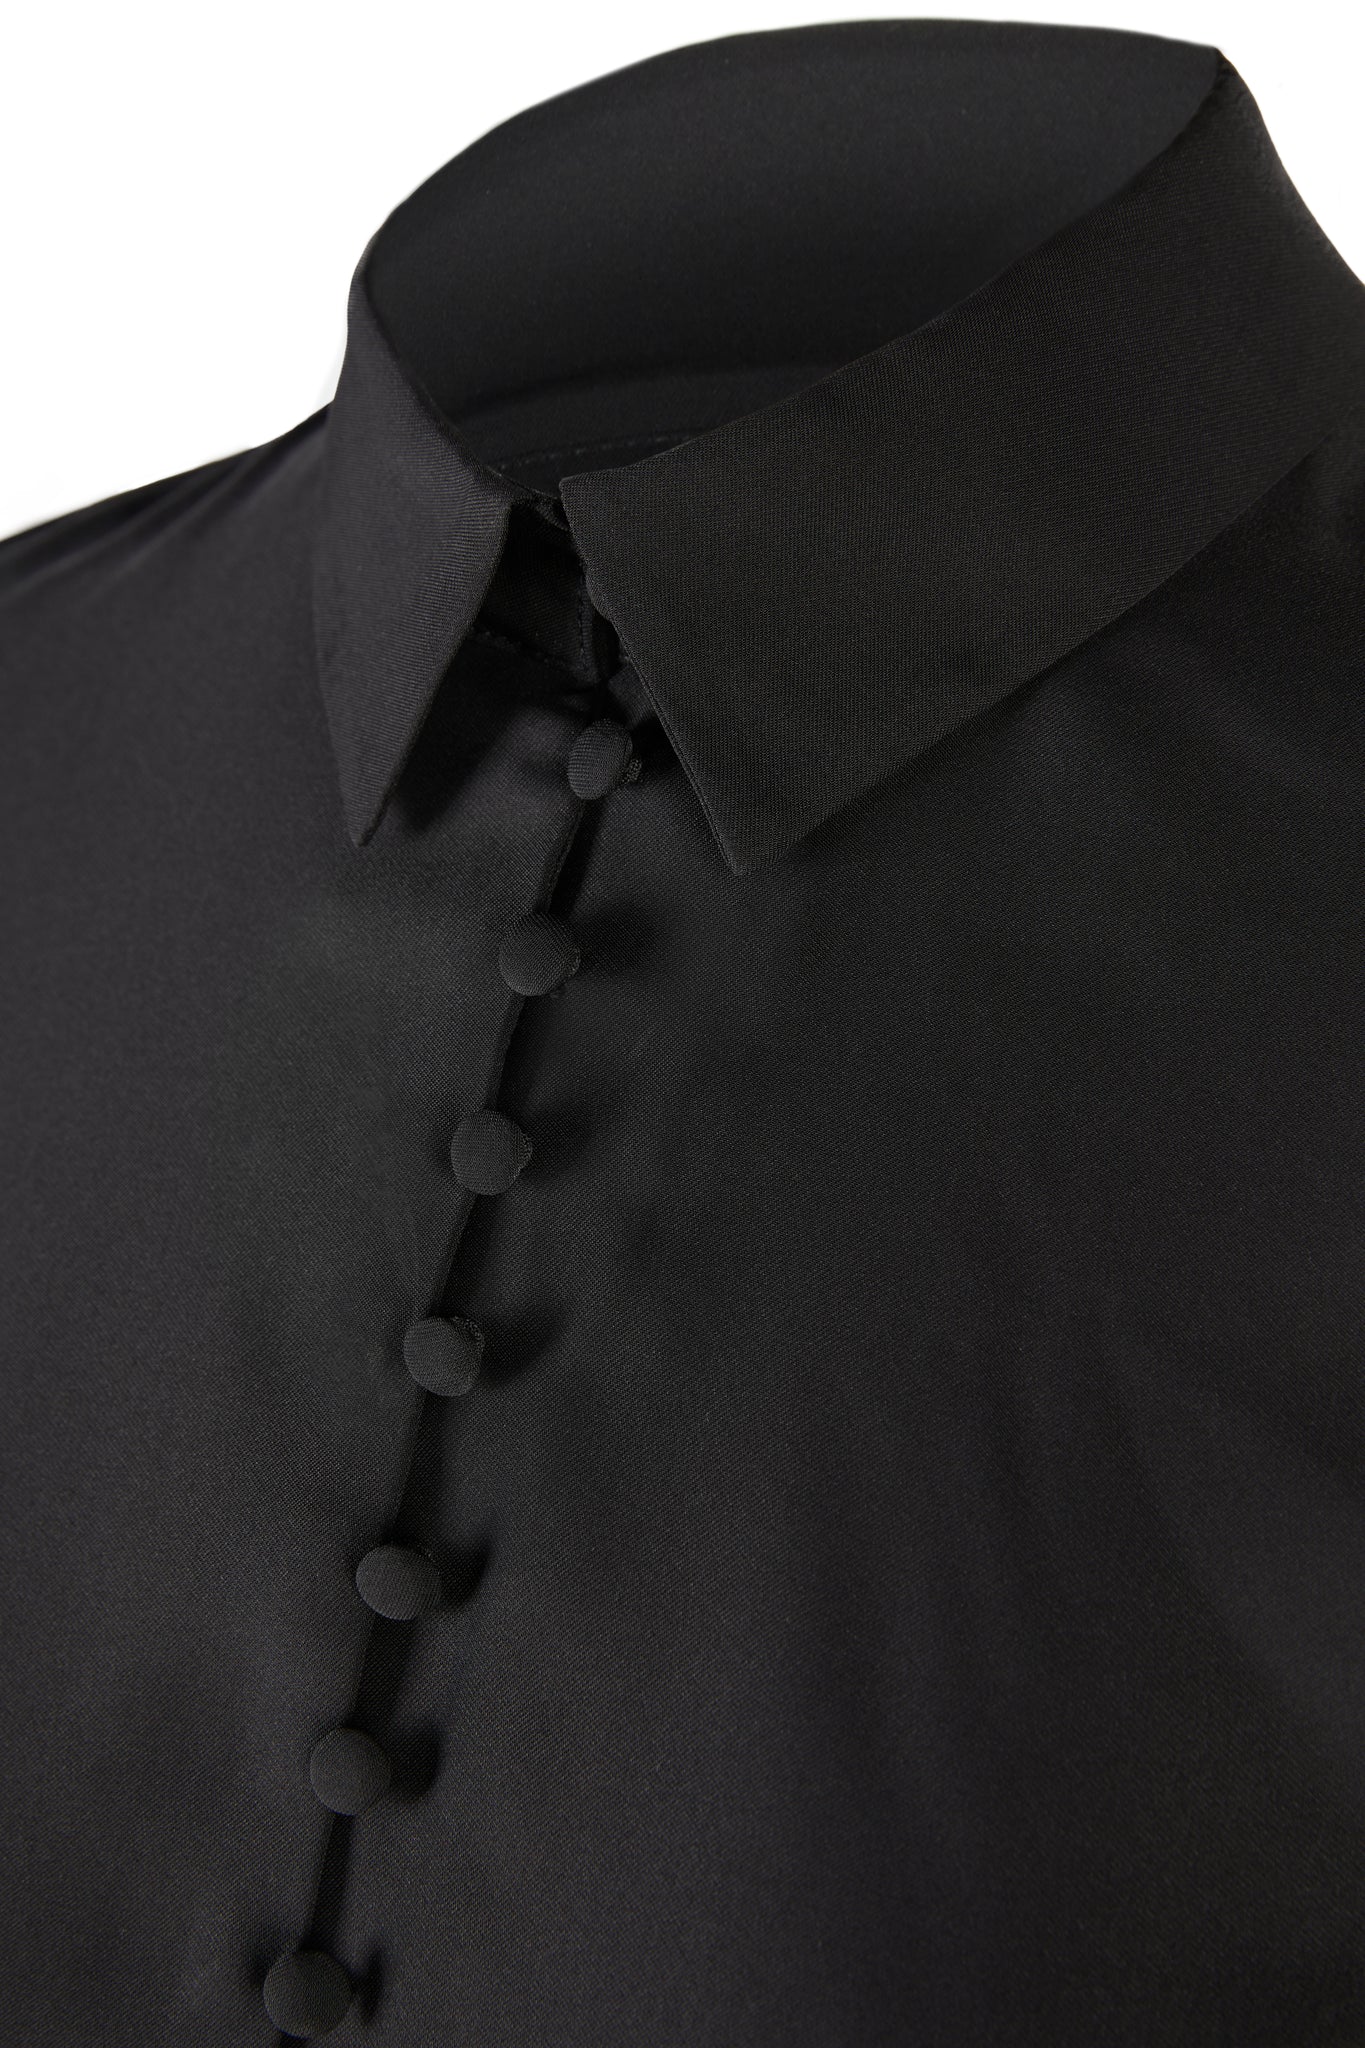 Classic Button Shirt (Black)